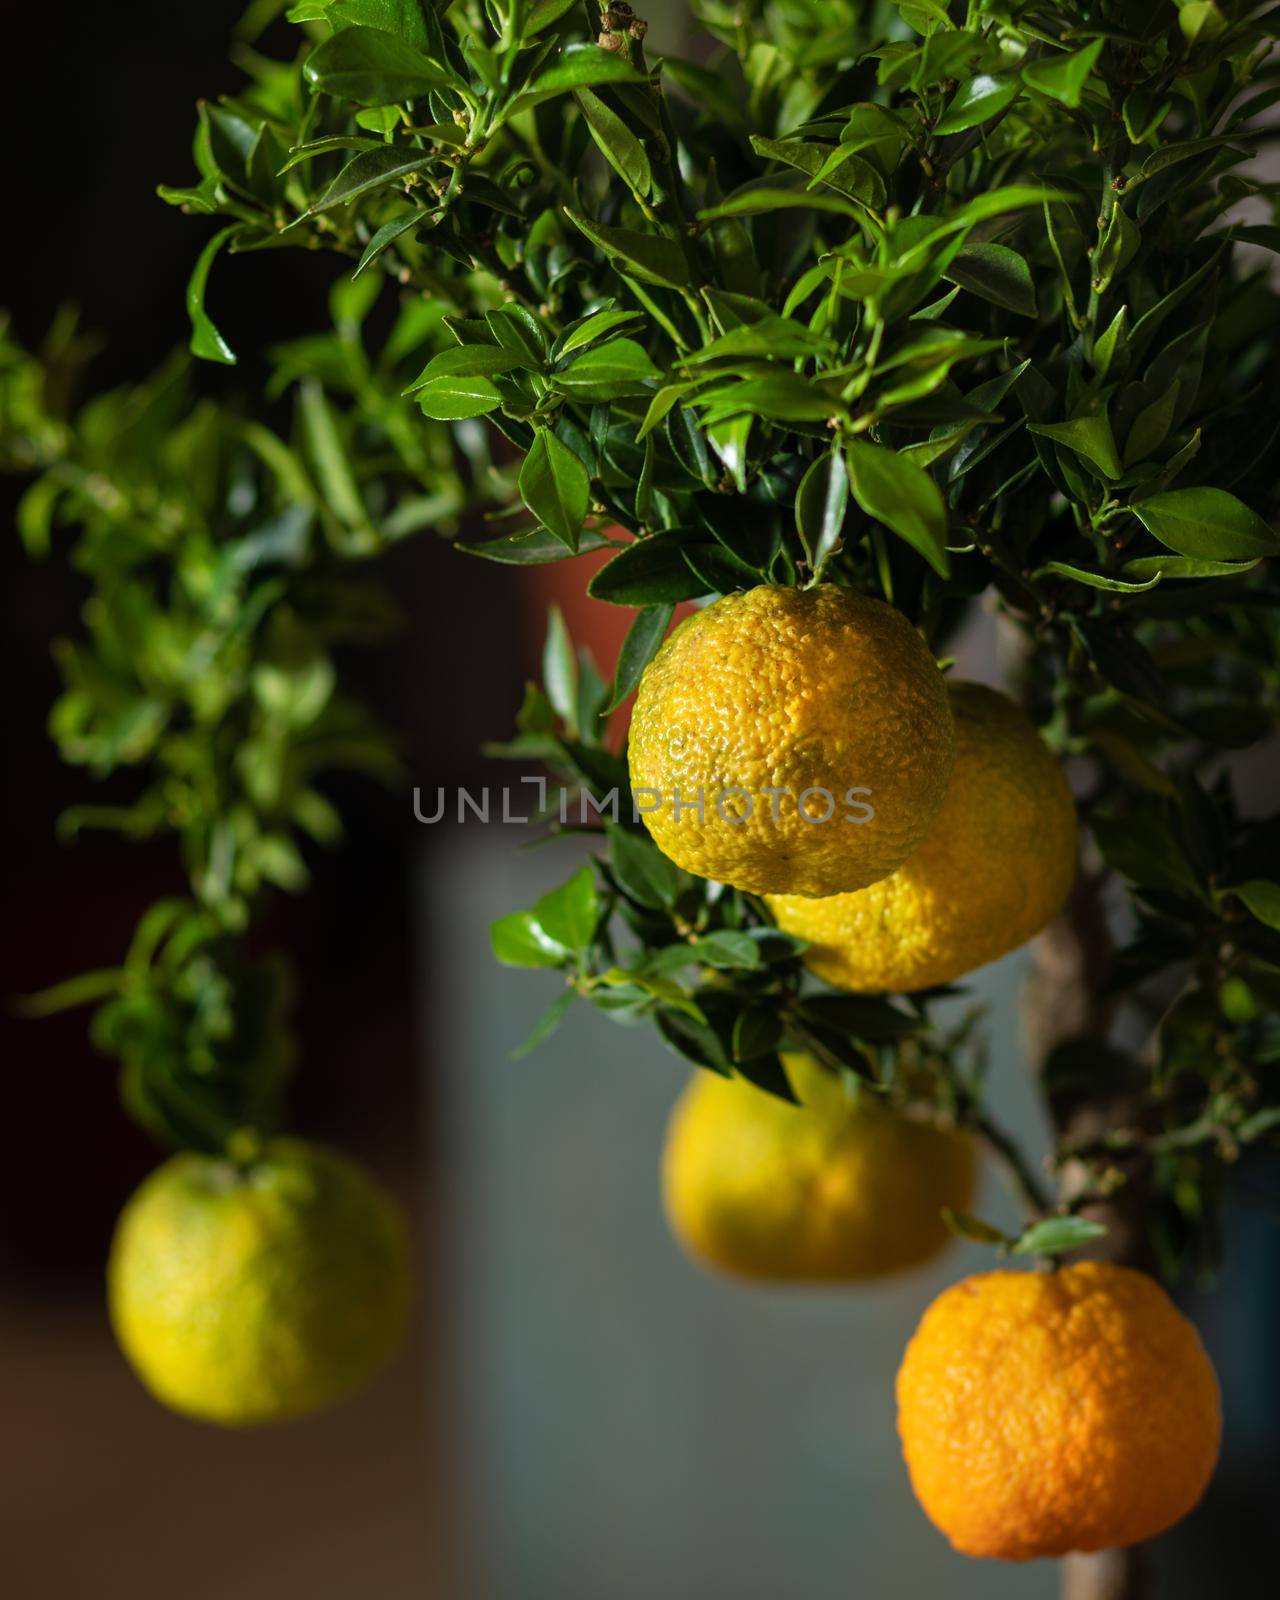 Lemon plant close up with dark background